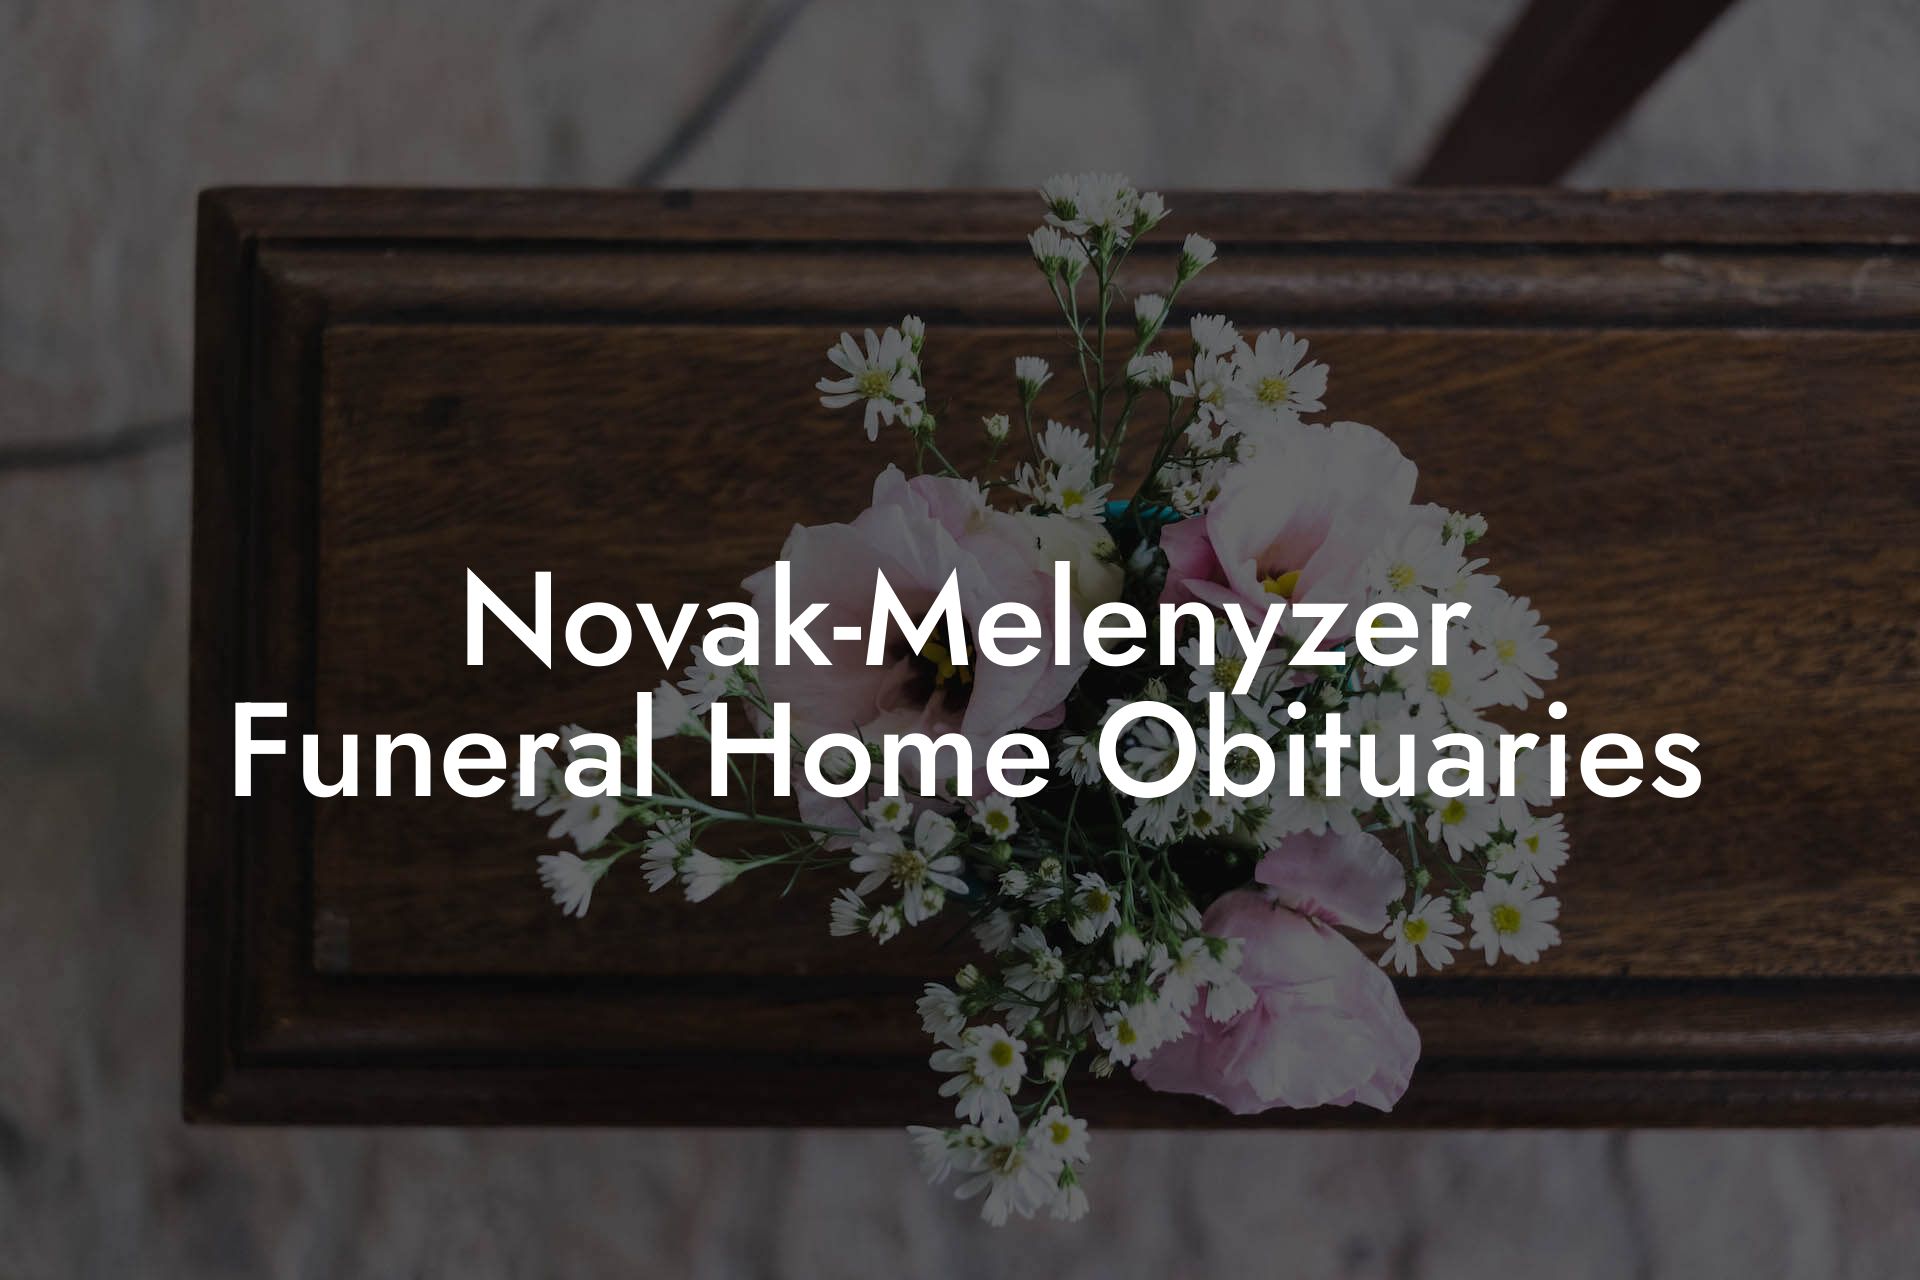 Novak-Melenyzer Funeral Home Obituaries